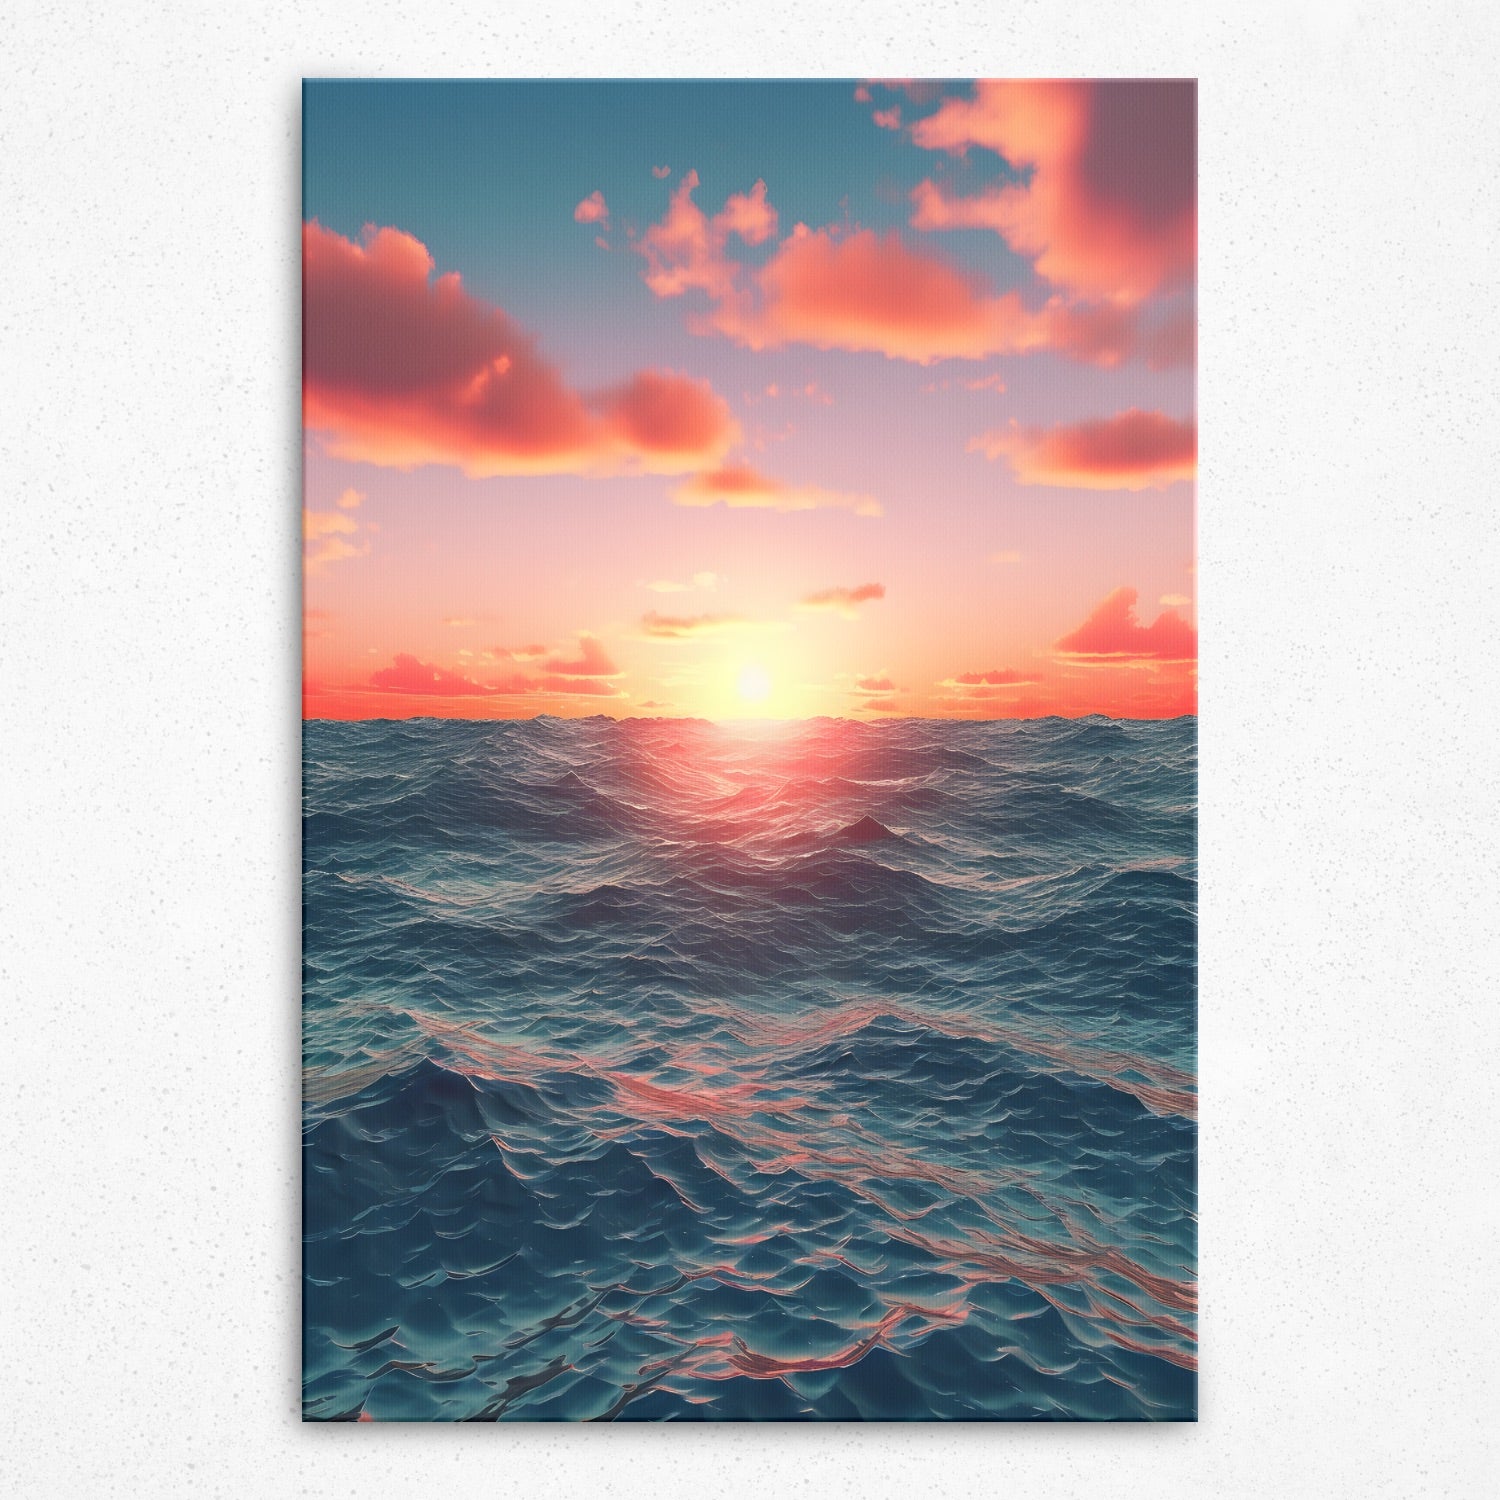 Sunset Horizon (Poster)